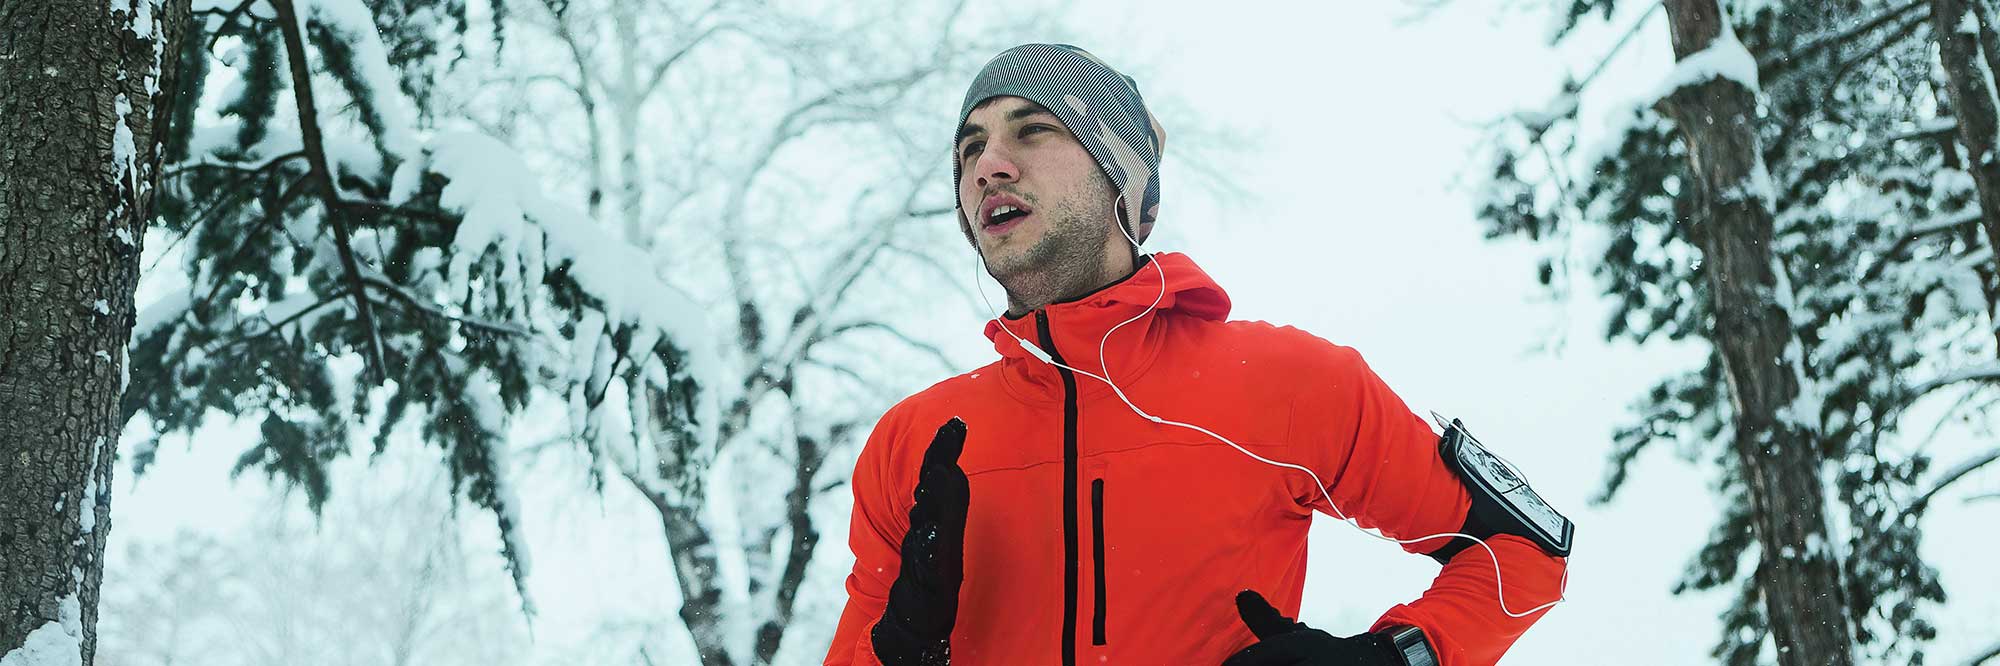 Prevent running injuries in winter